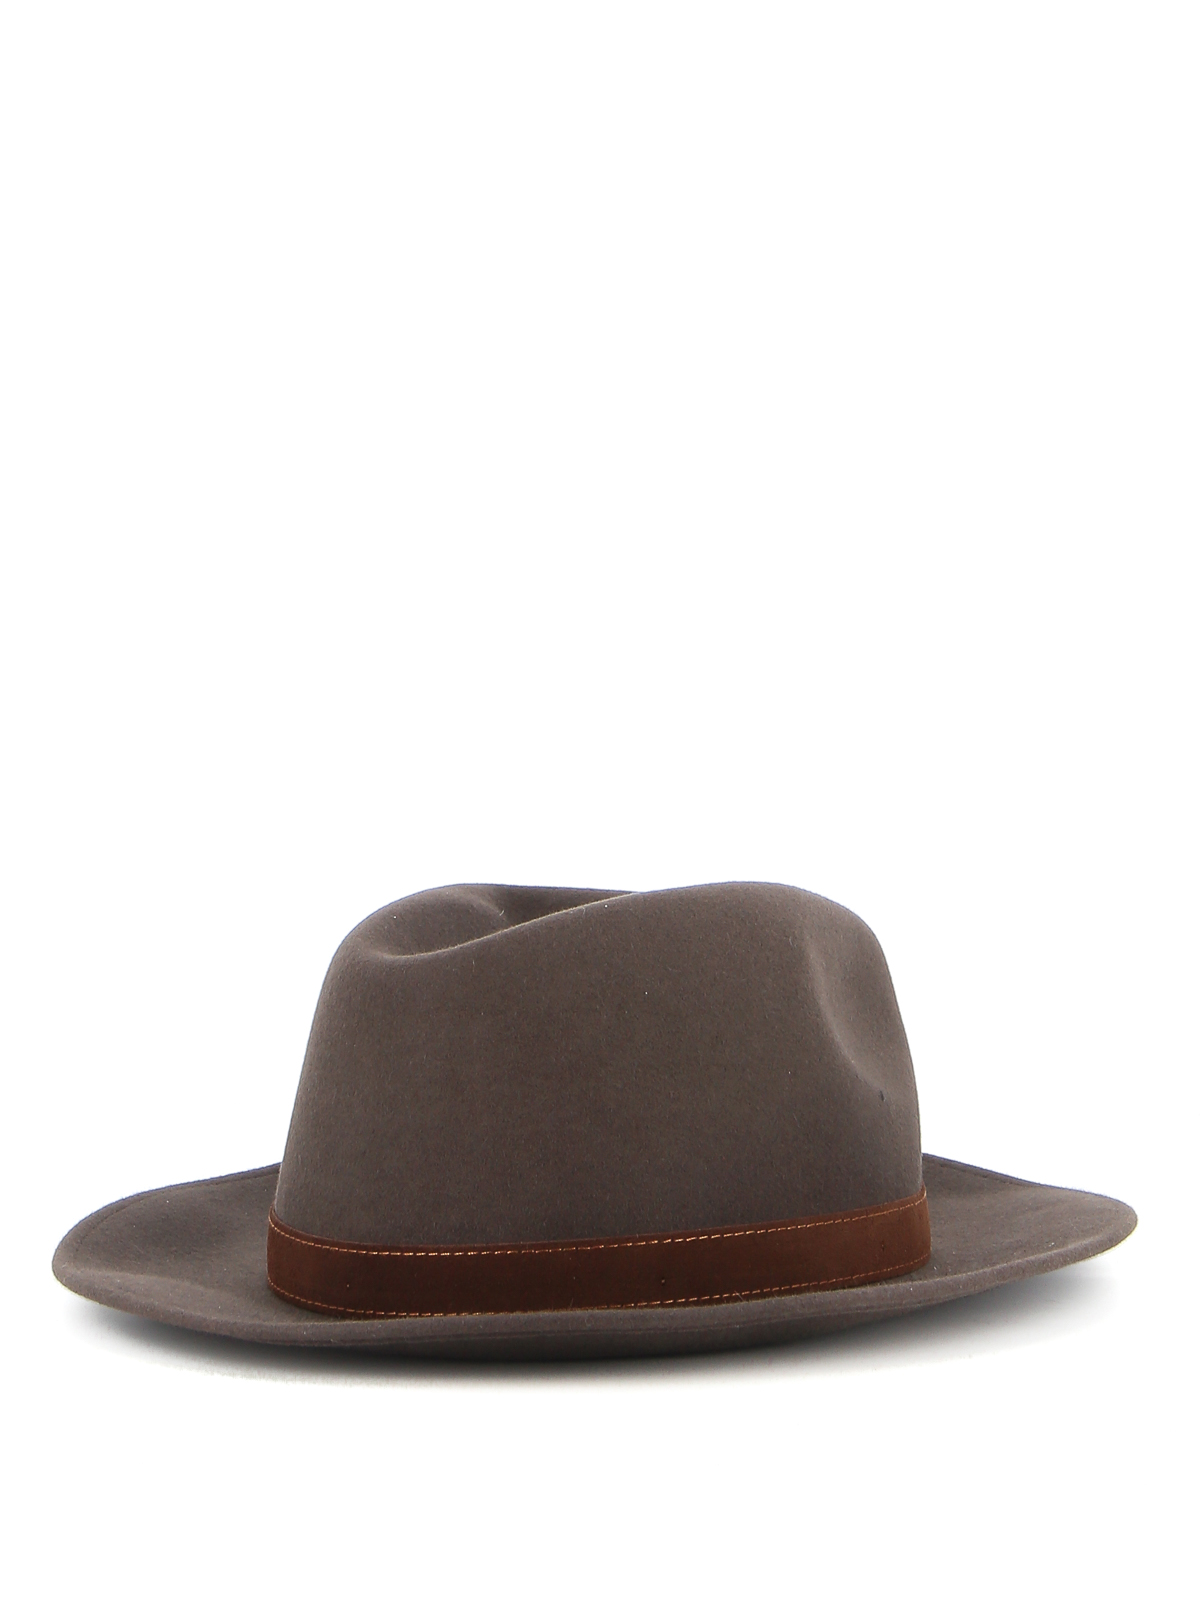 Hats & caps Borsalino - Country Alessandria fedora hat - 3900600340